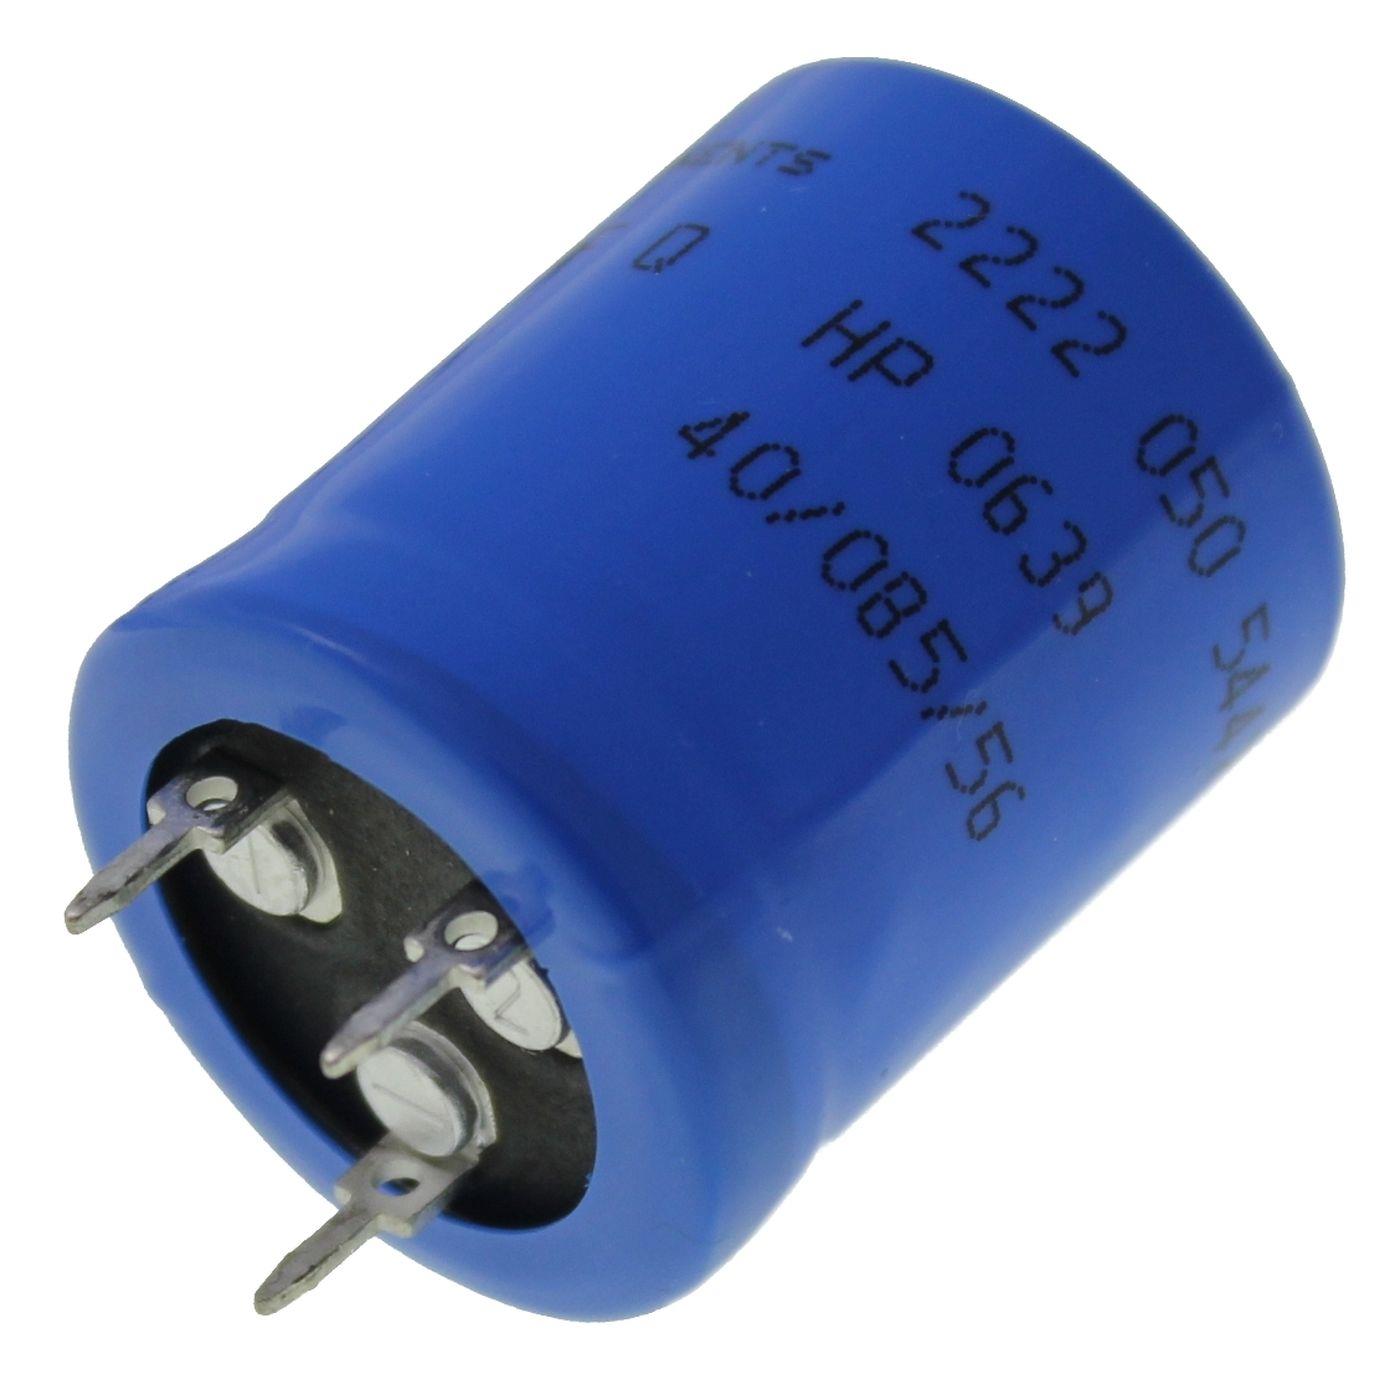 3-Pin Elko Kondensator Radial 4700µF 10V 85°C 222205054472 d25x30mm 4700uF